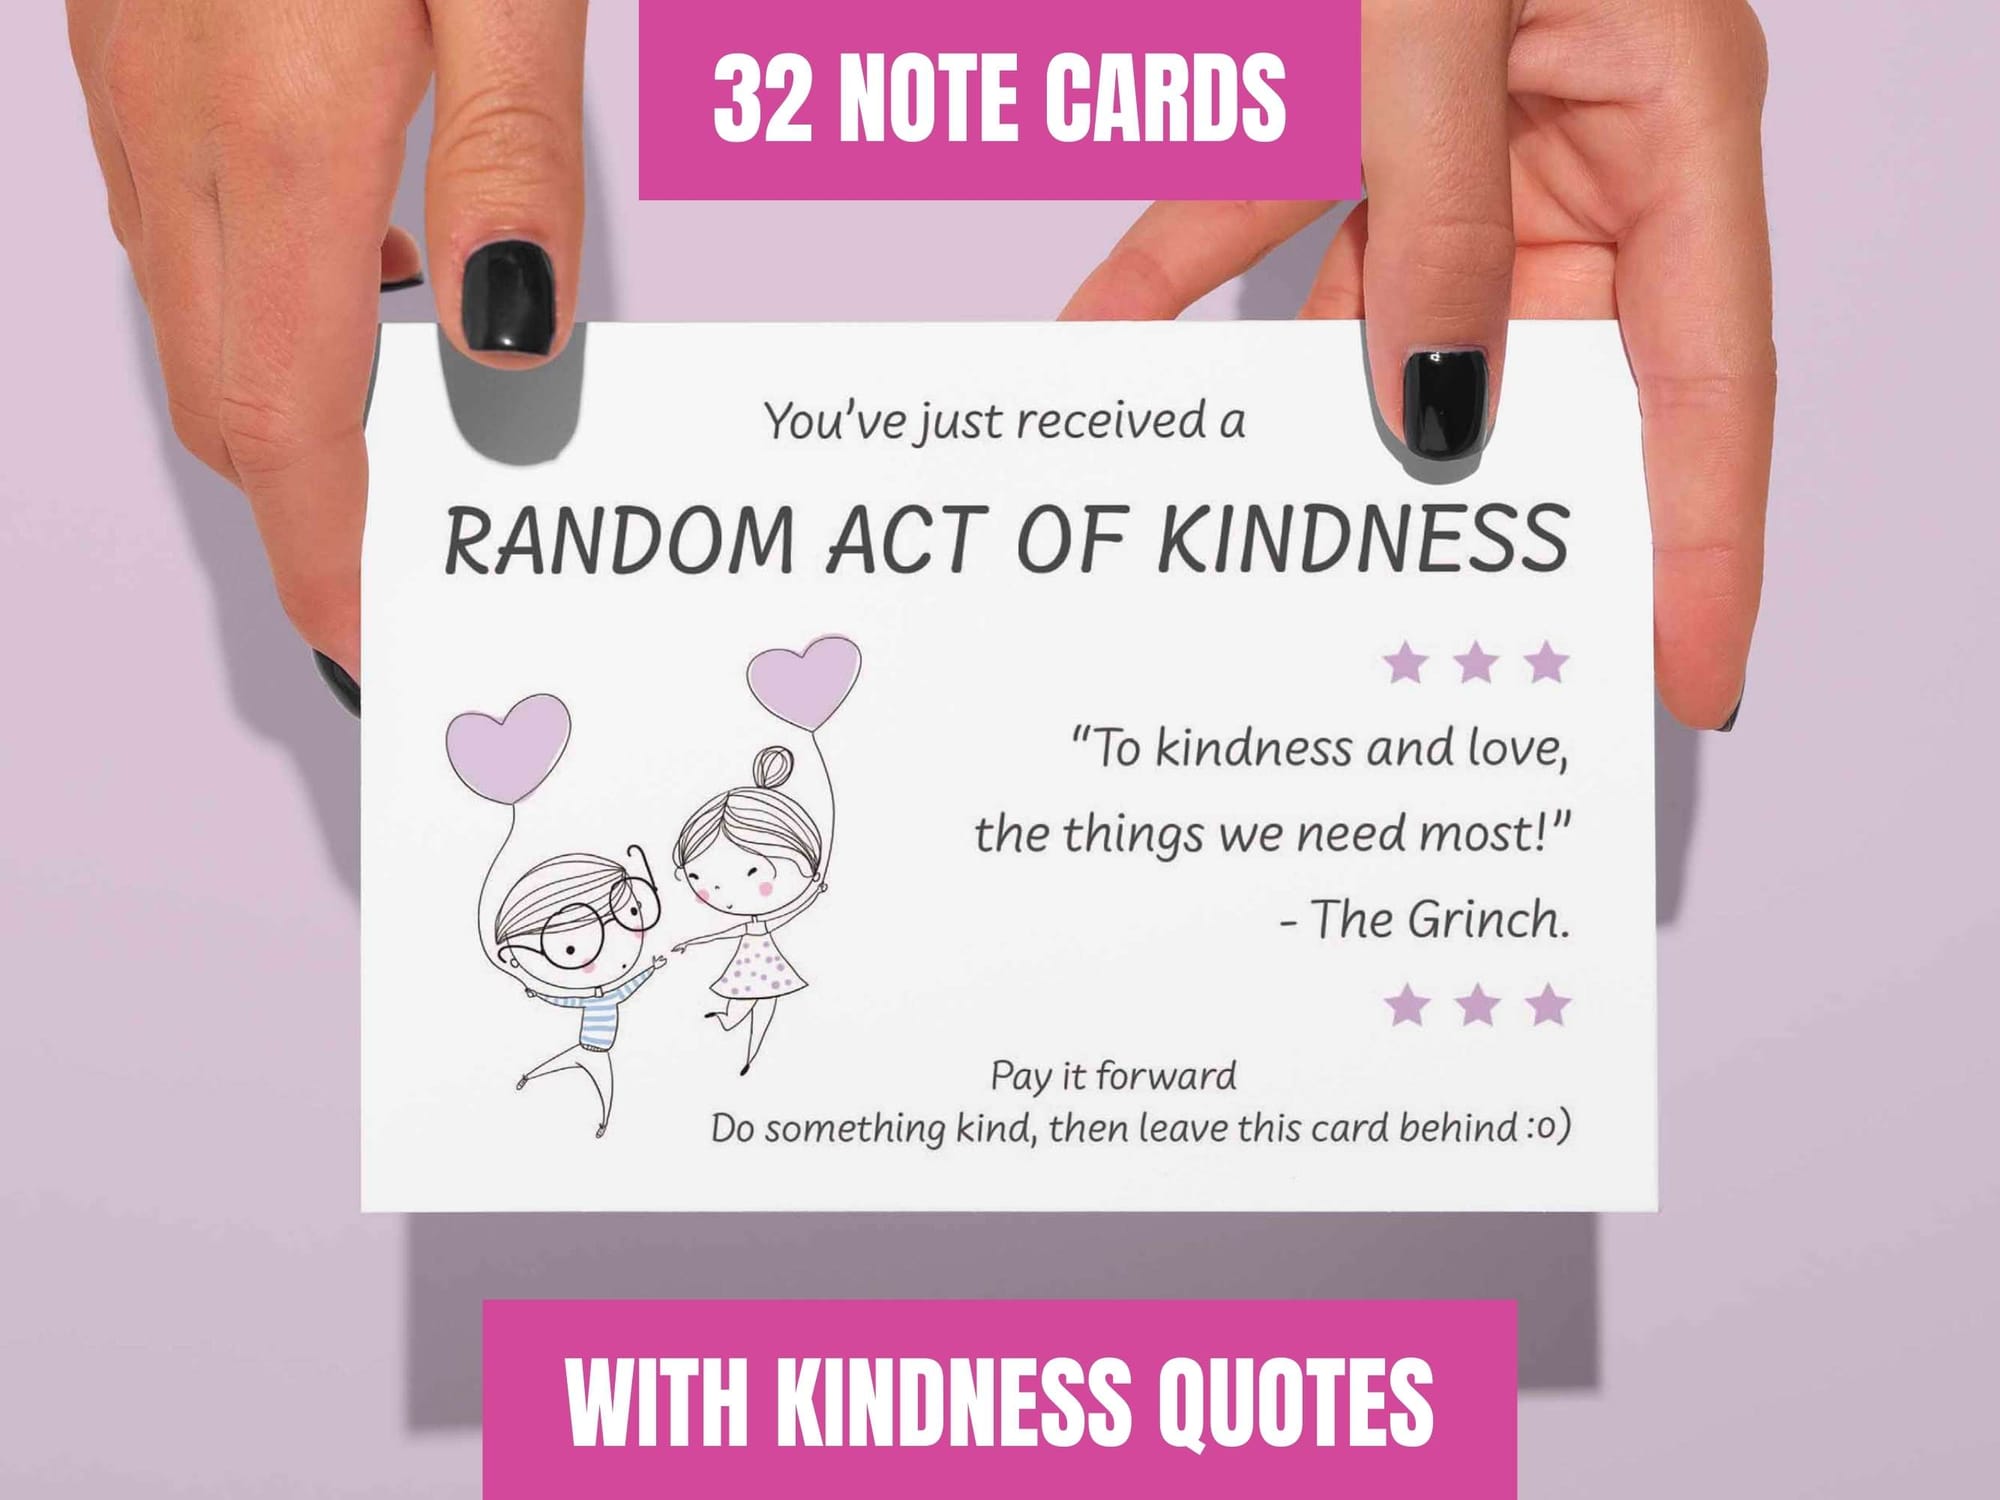 Kindness cards